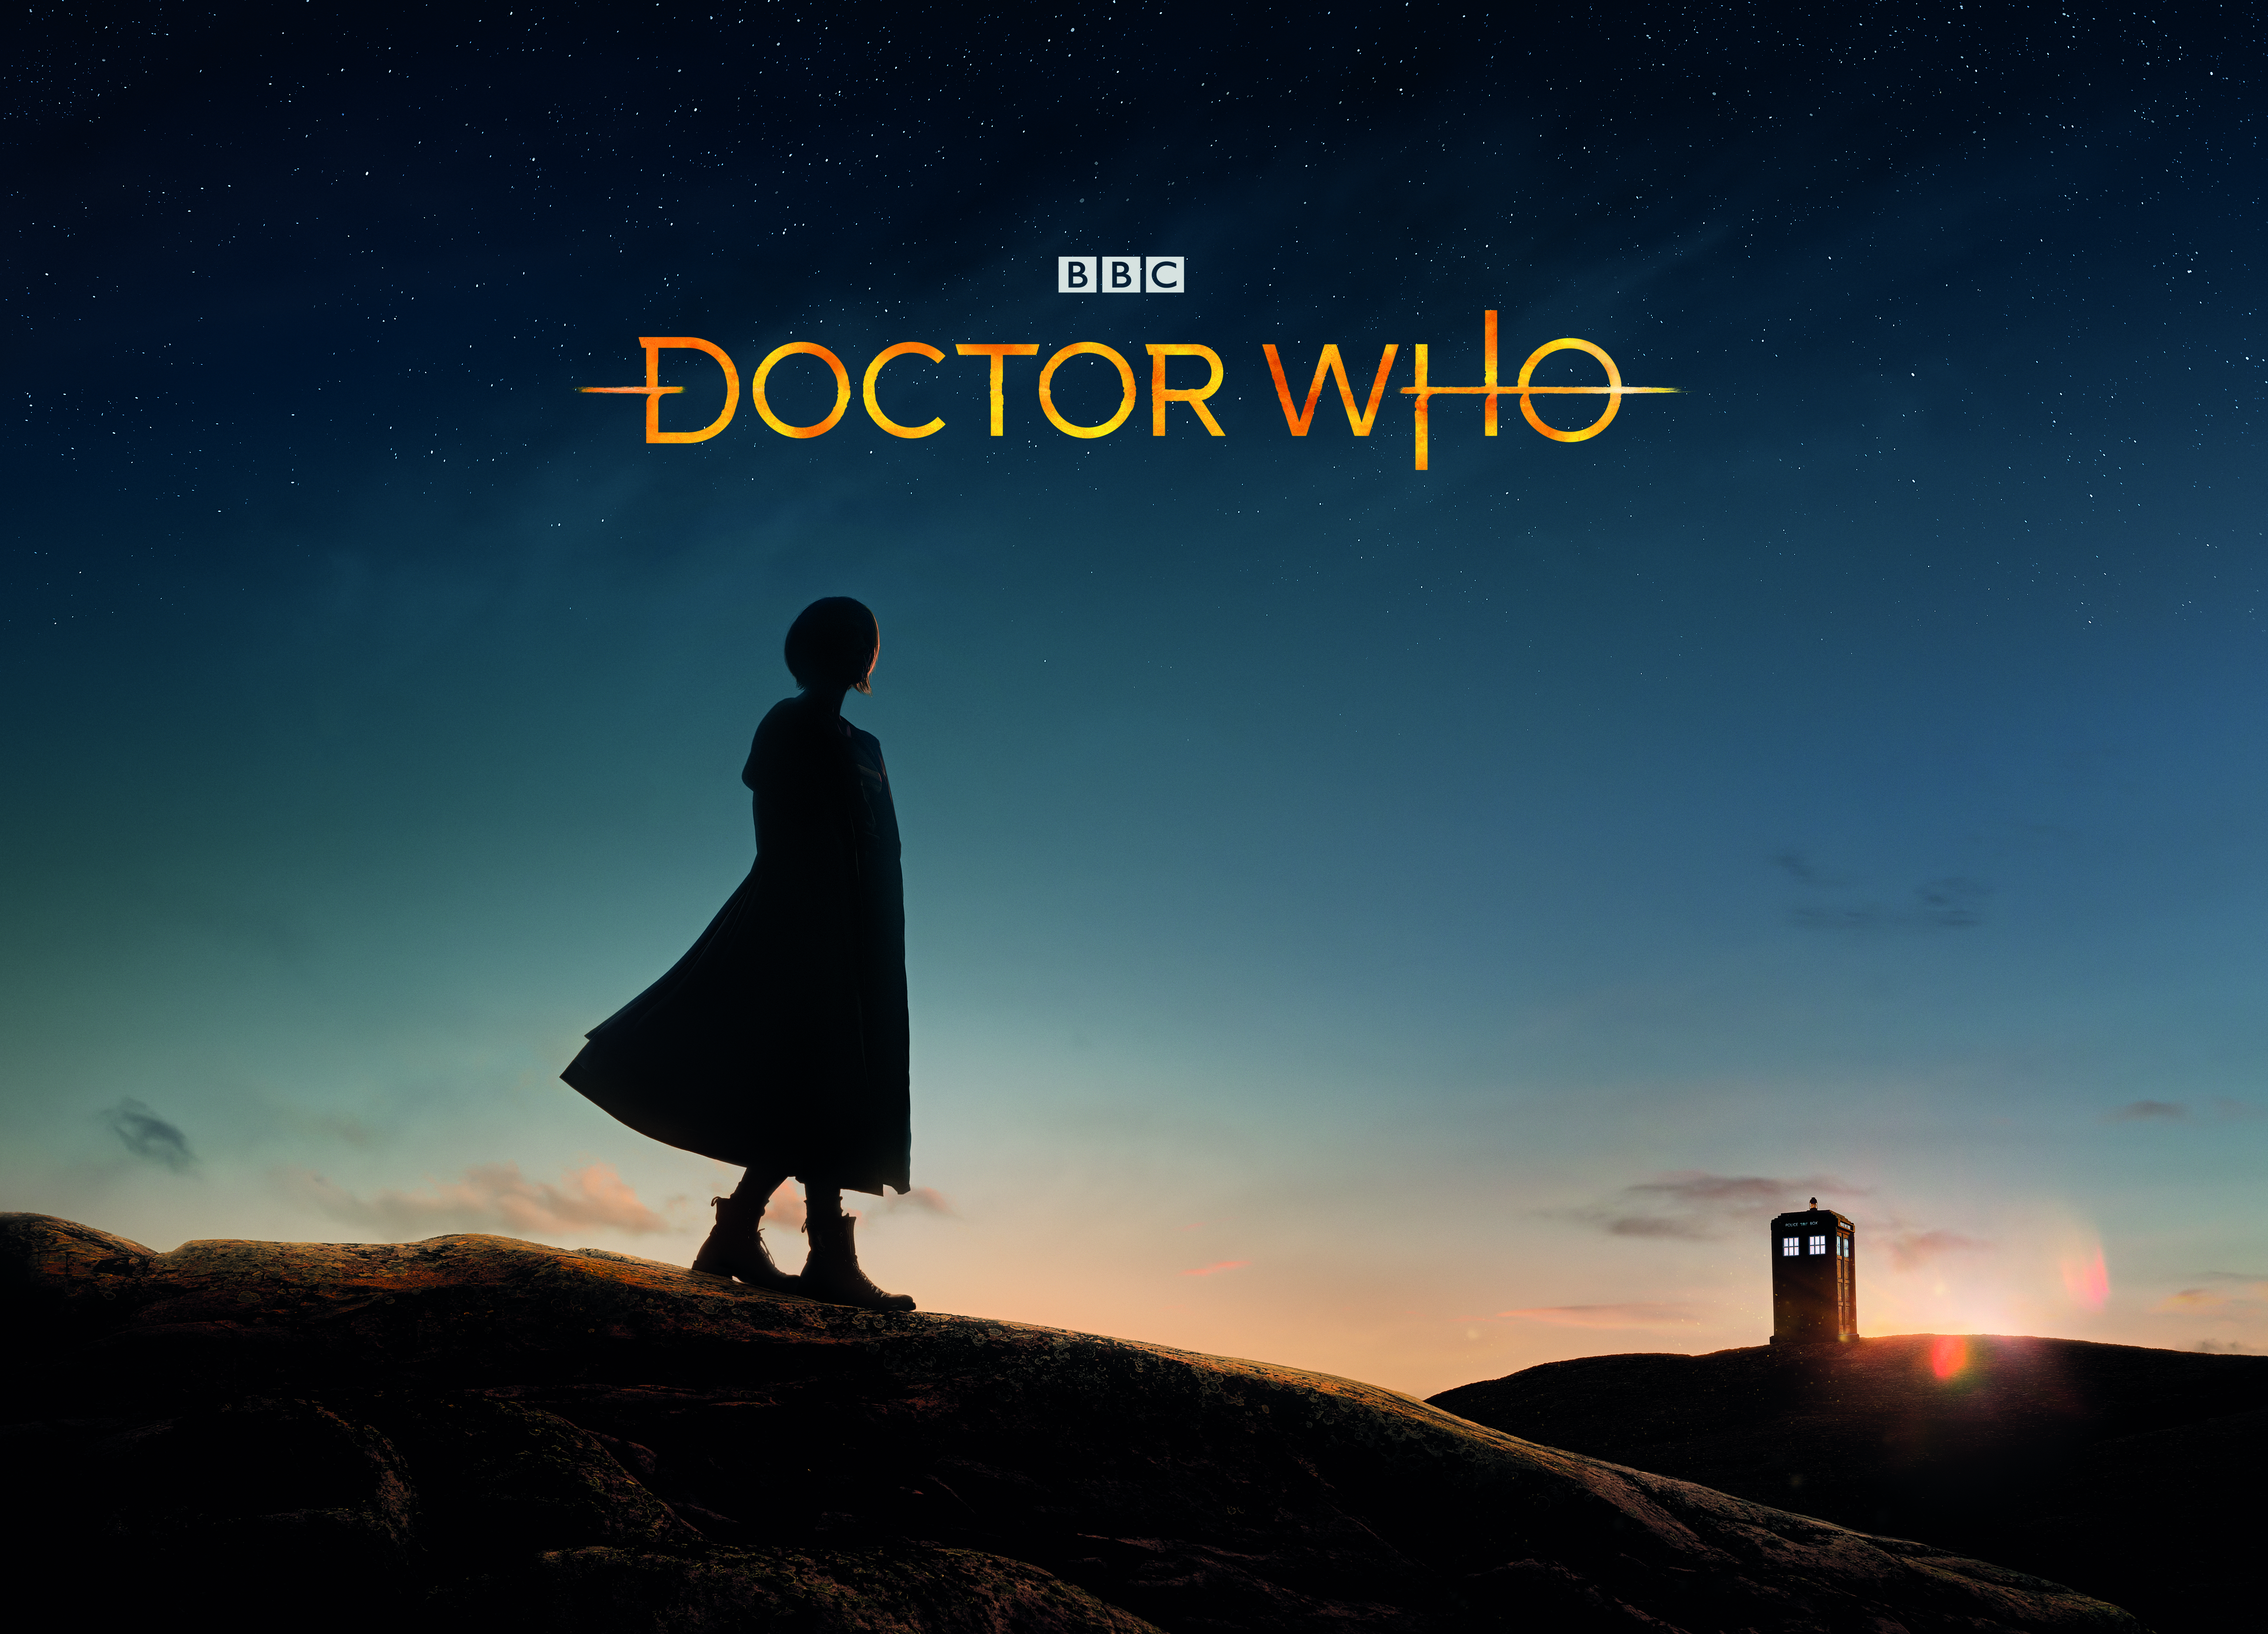 Doctor_Who_Iconic_Logo_A3_Landscape_420x297mm_300dpi_CMYK_AW